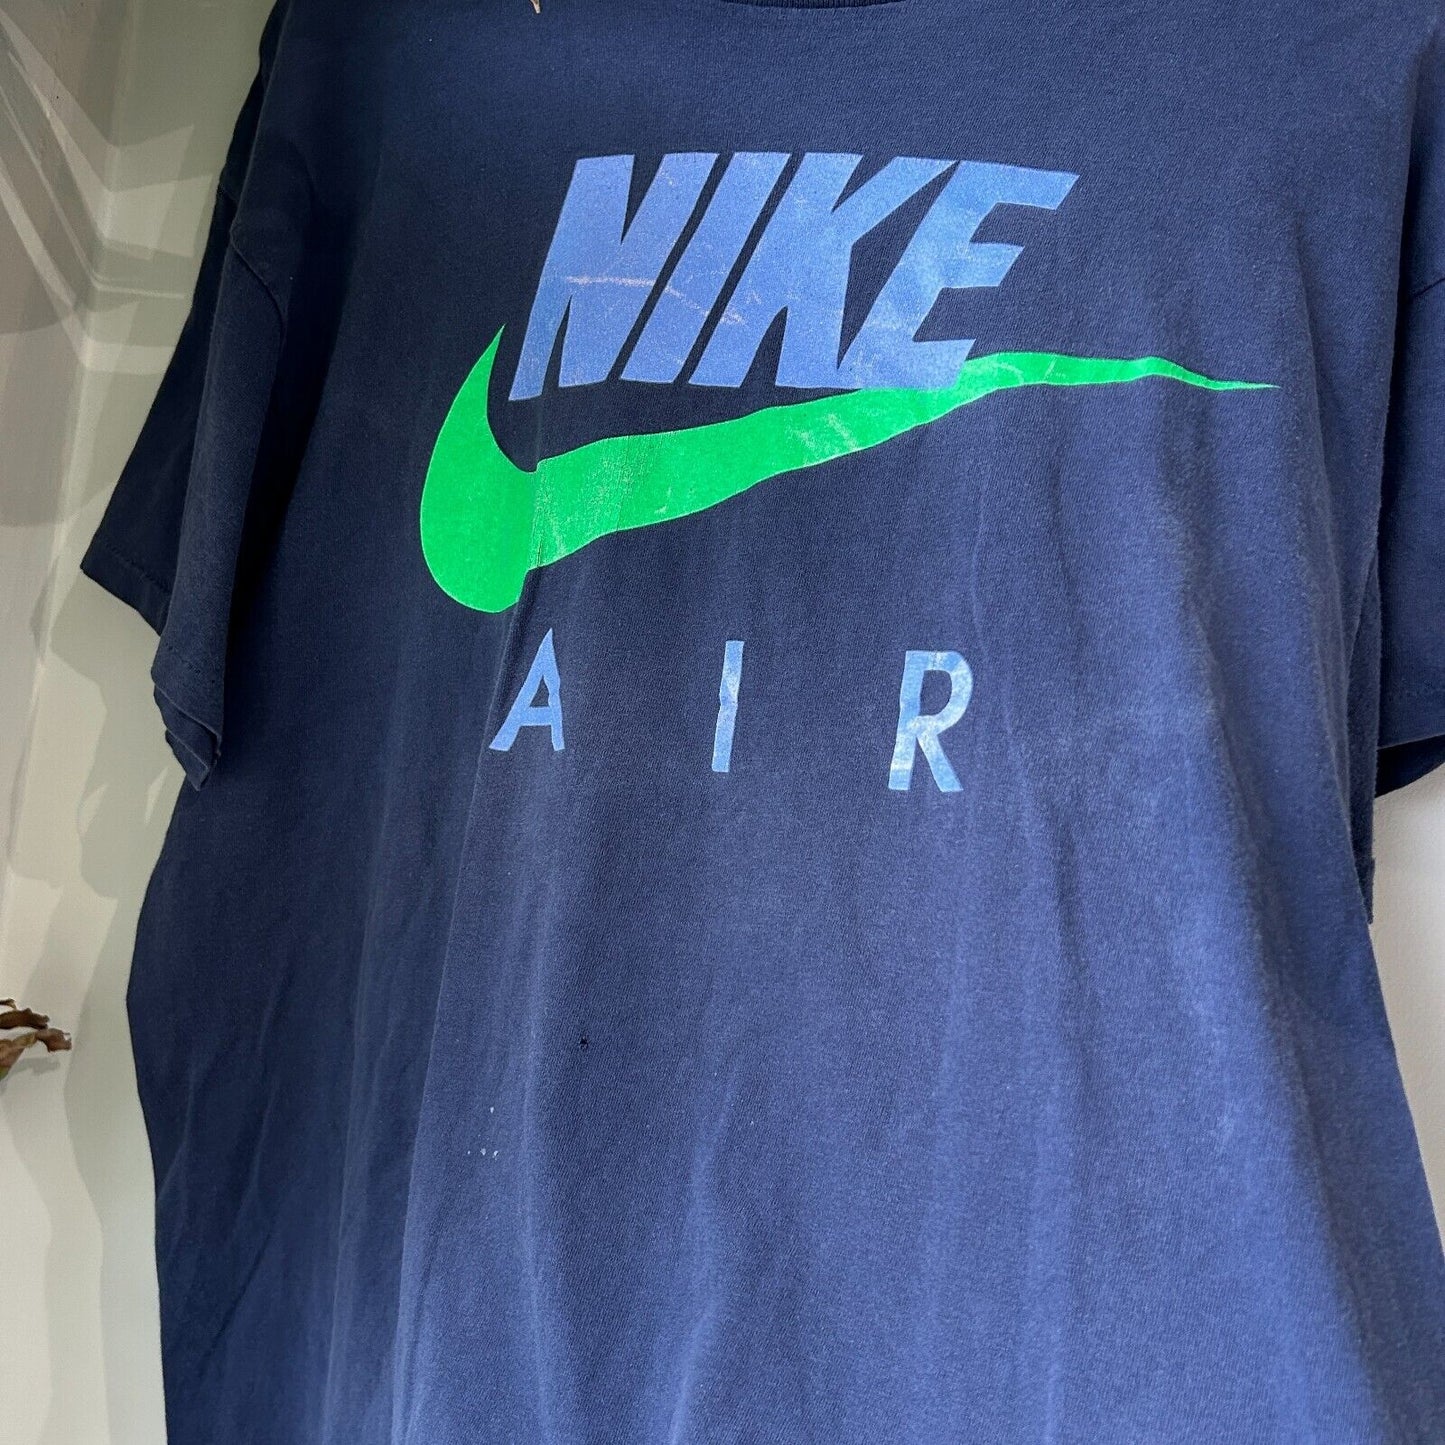 VINTAGE 80s | NIKE AIR Big Swoosh Logo Grey Tag T-Shirt sz XL Adult